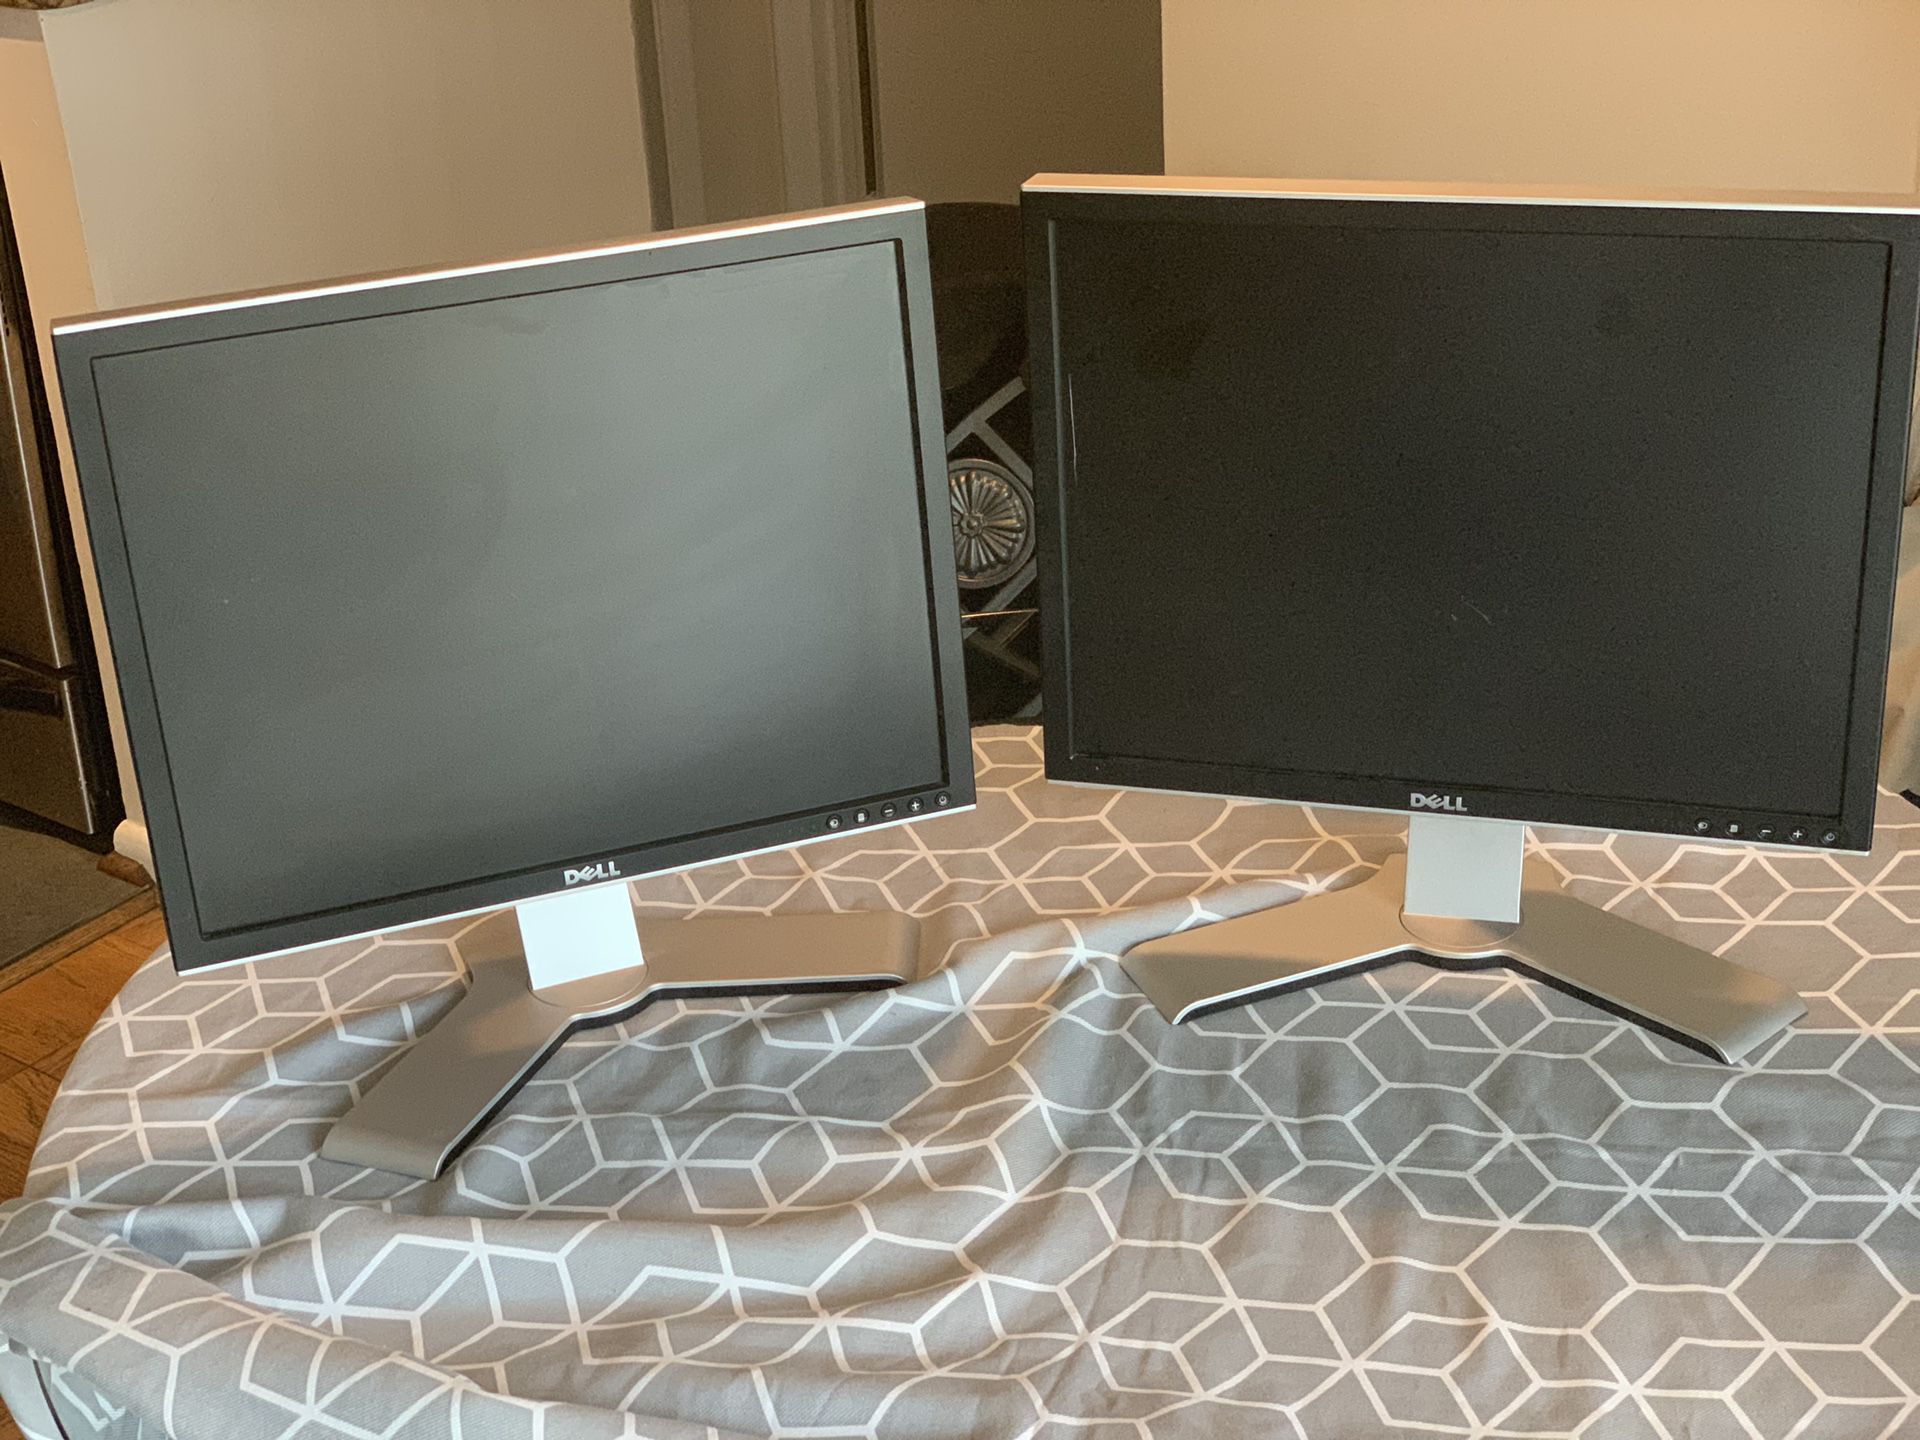 Dual screen monitors